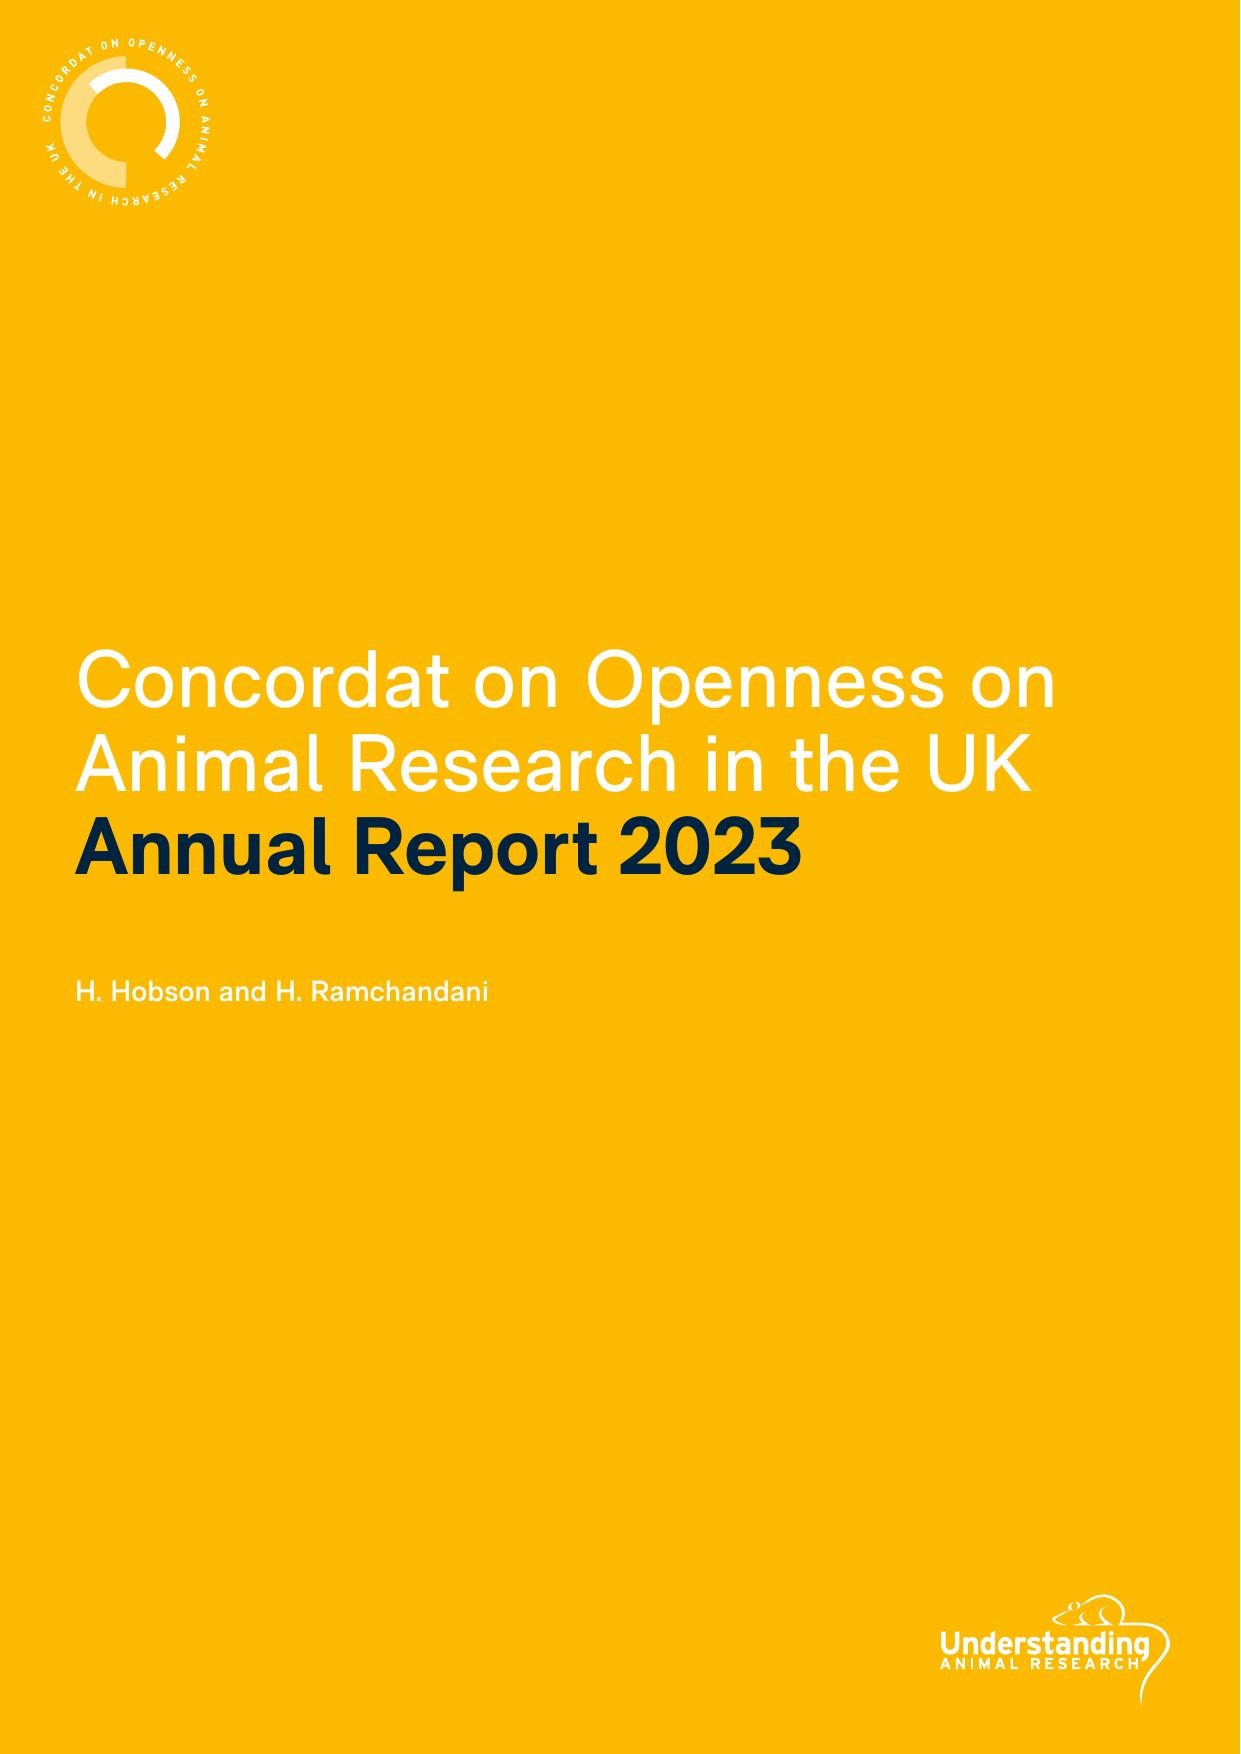 UNDERSTANDINGANIMALRESEARCH.ORG.UK 2023 Annual Report